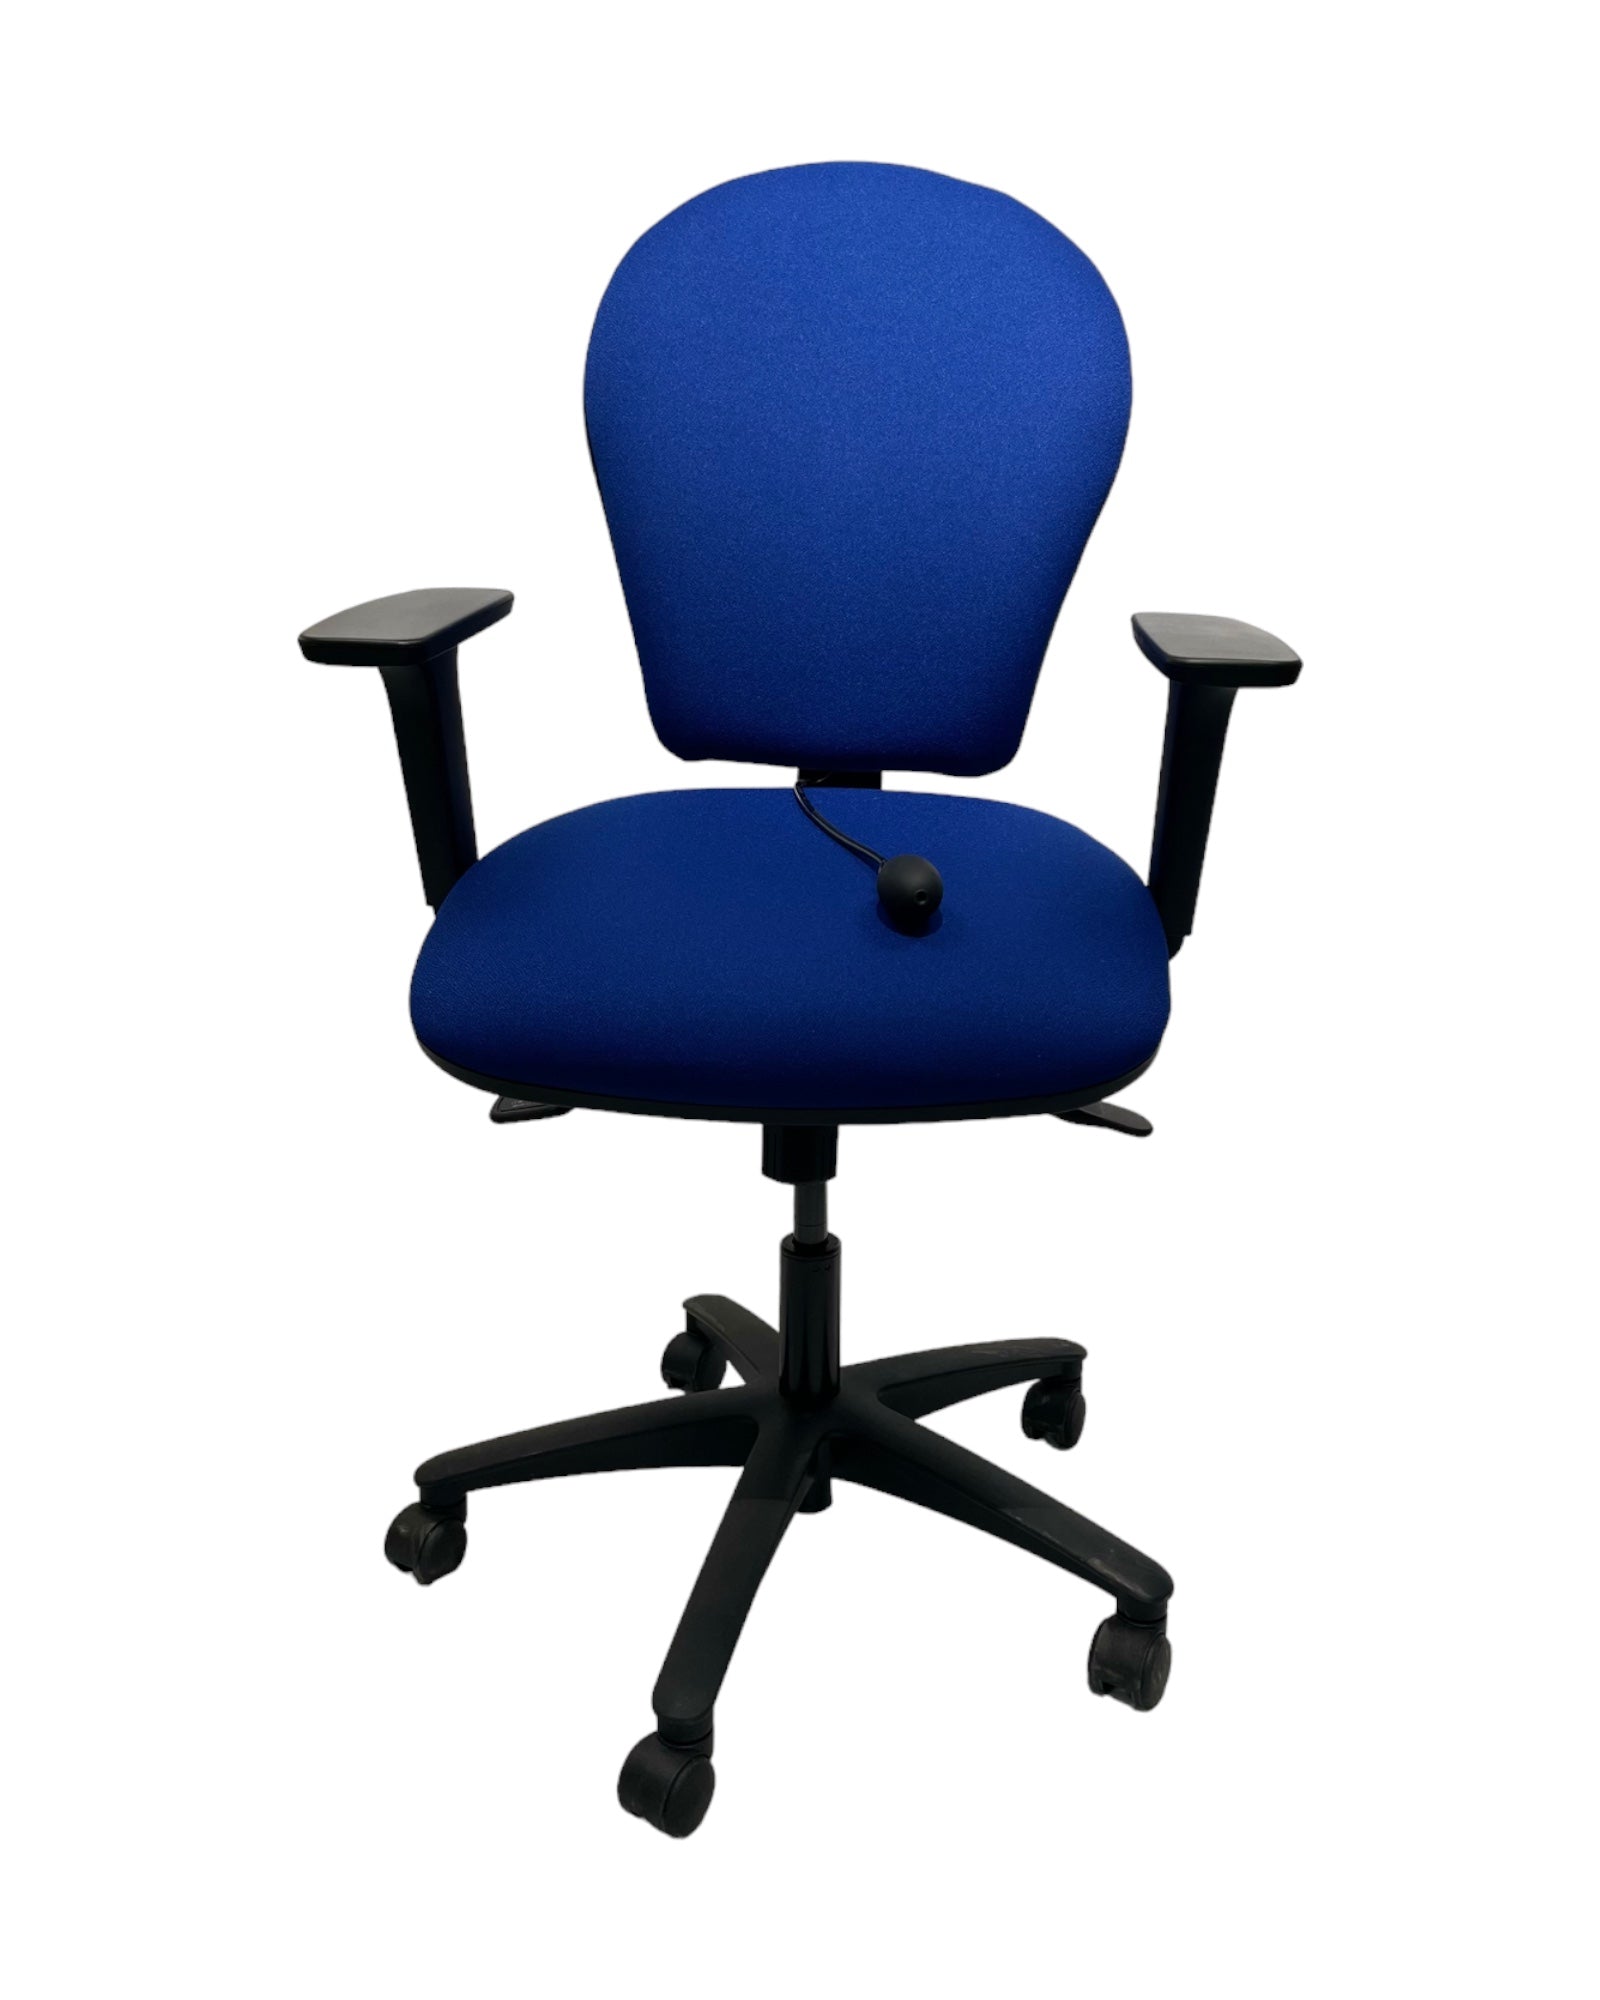 Kinetic 4 upholstered operator chair